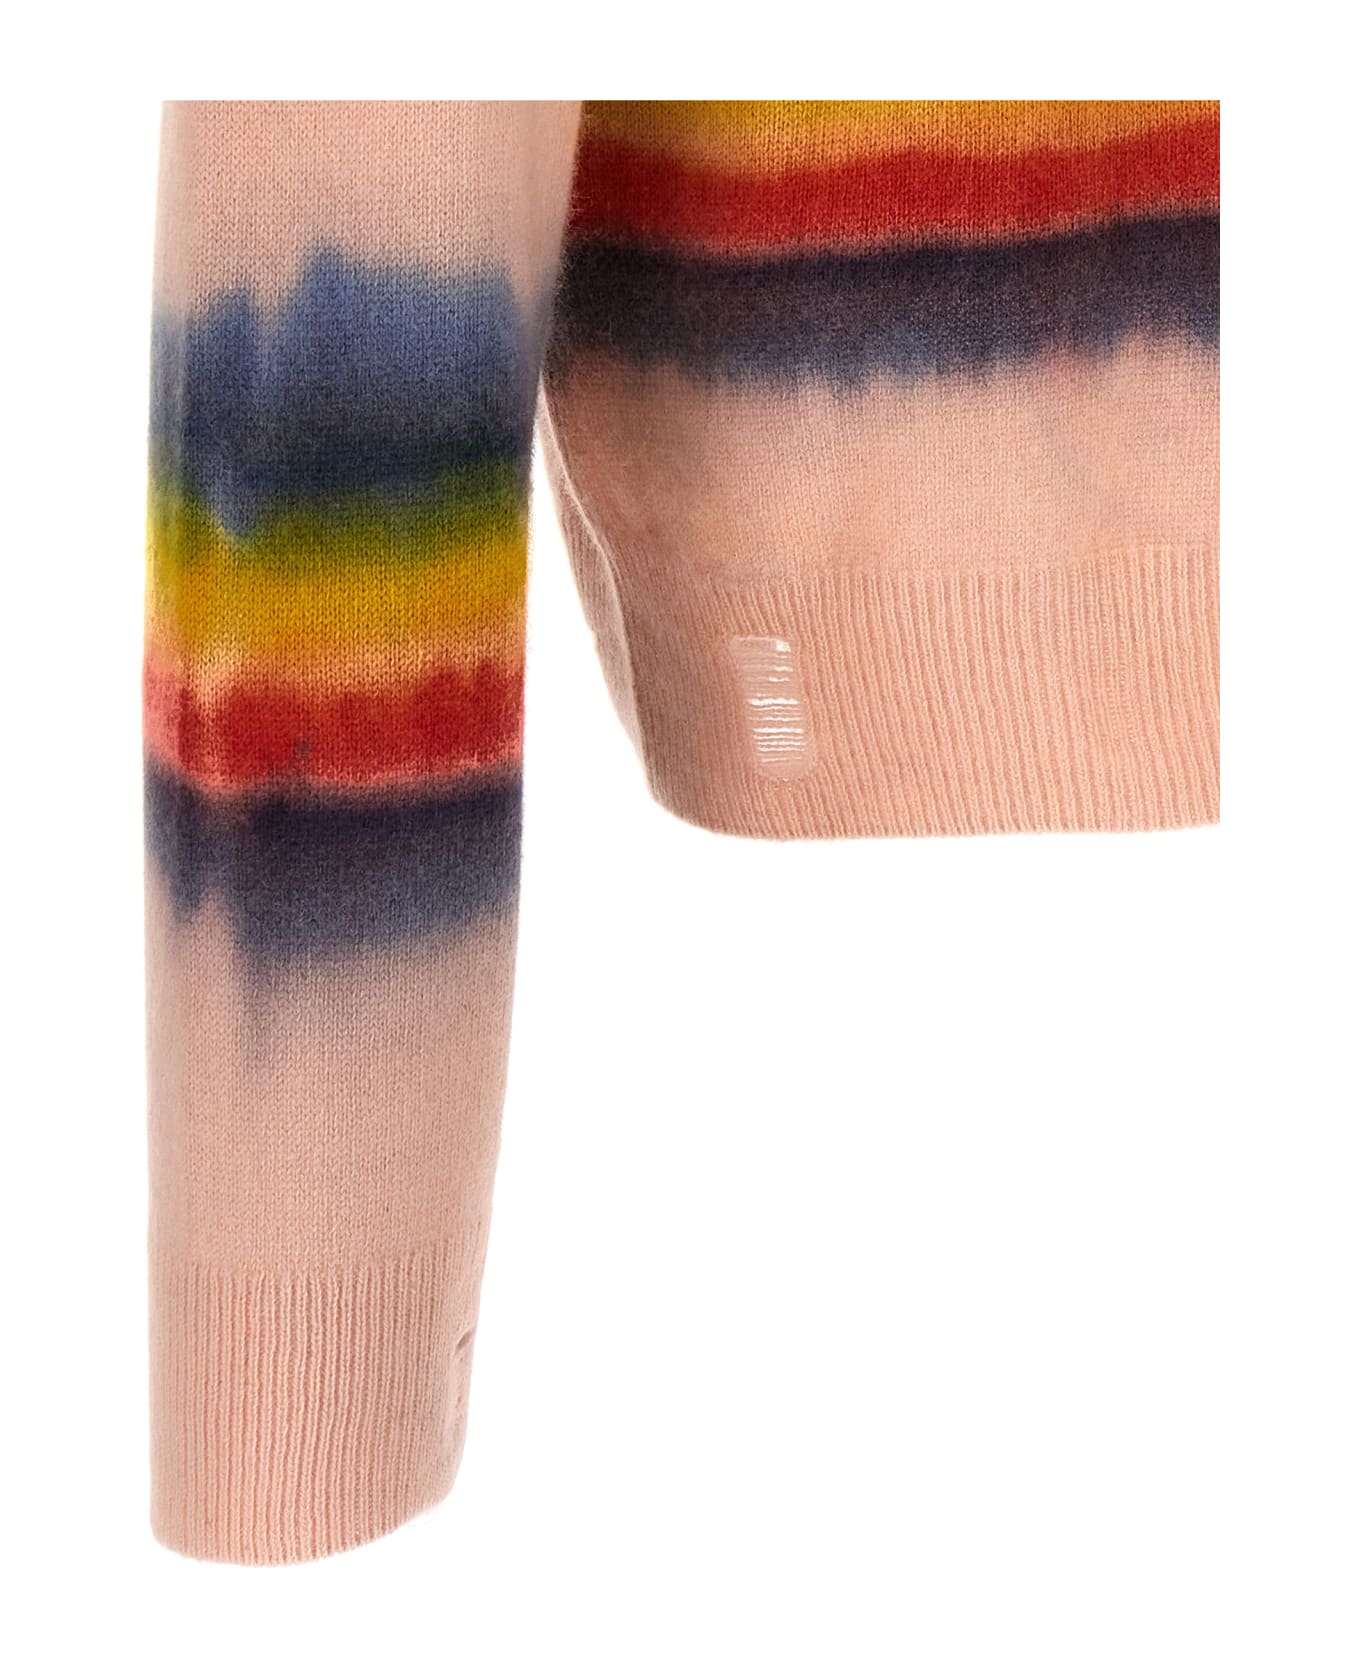 AMIRI 'rainbow Tie Dye' Sweater - Multicolor ニットウェア